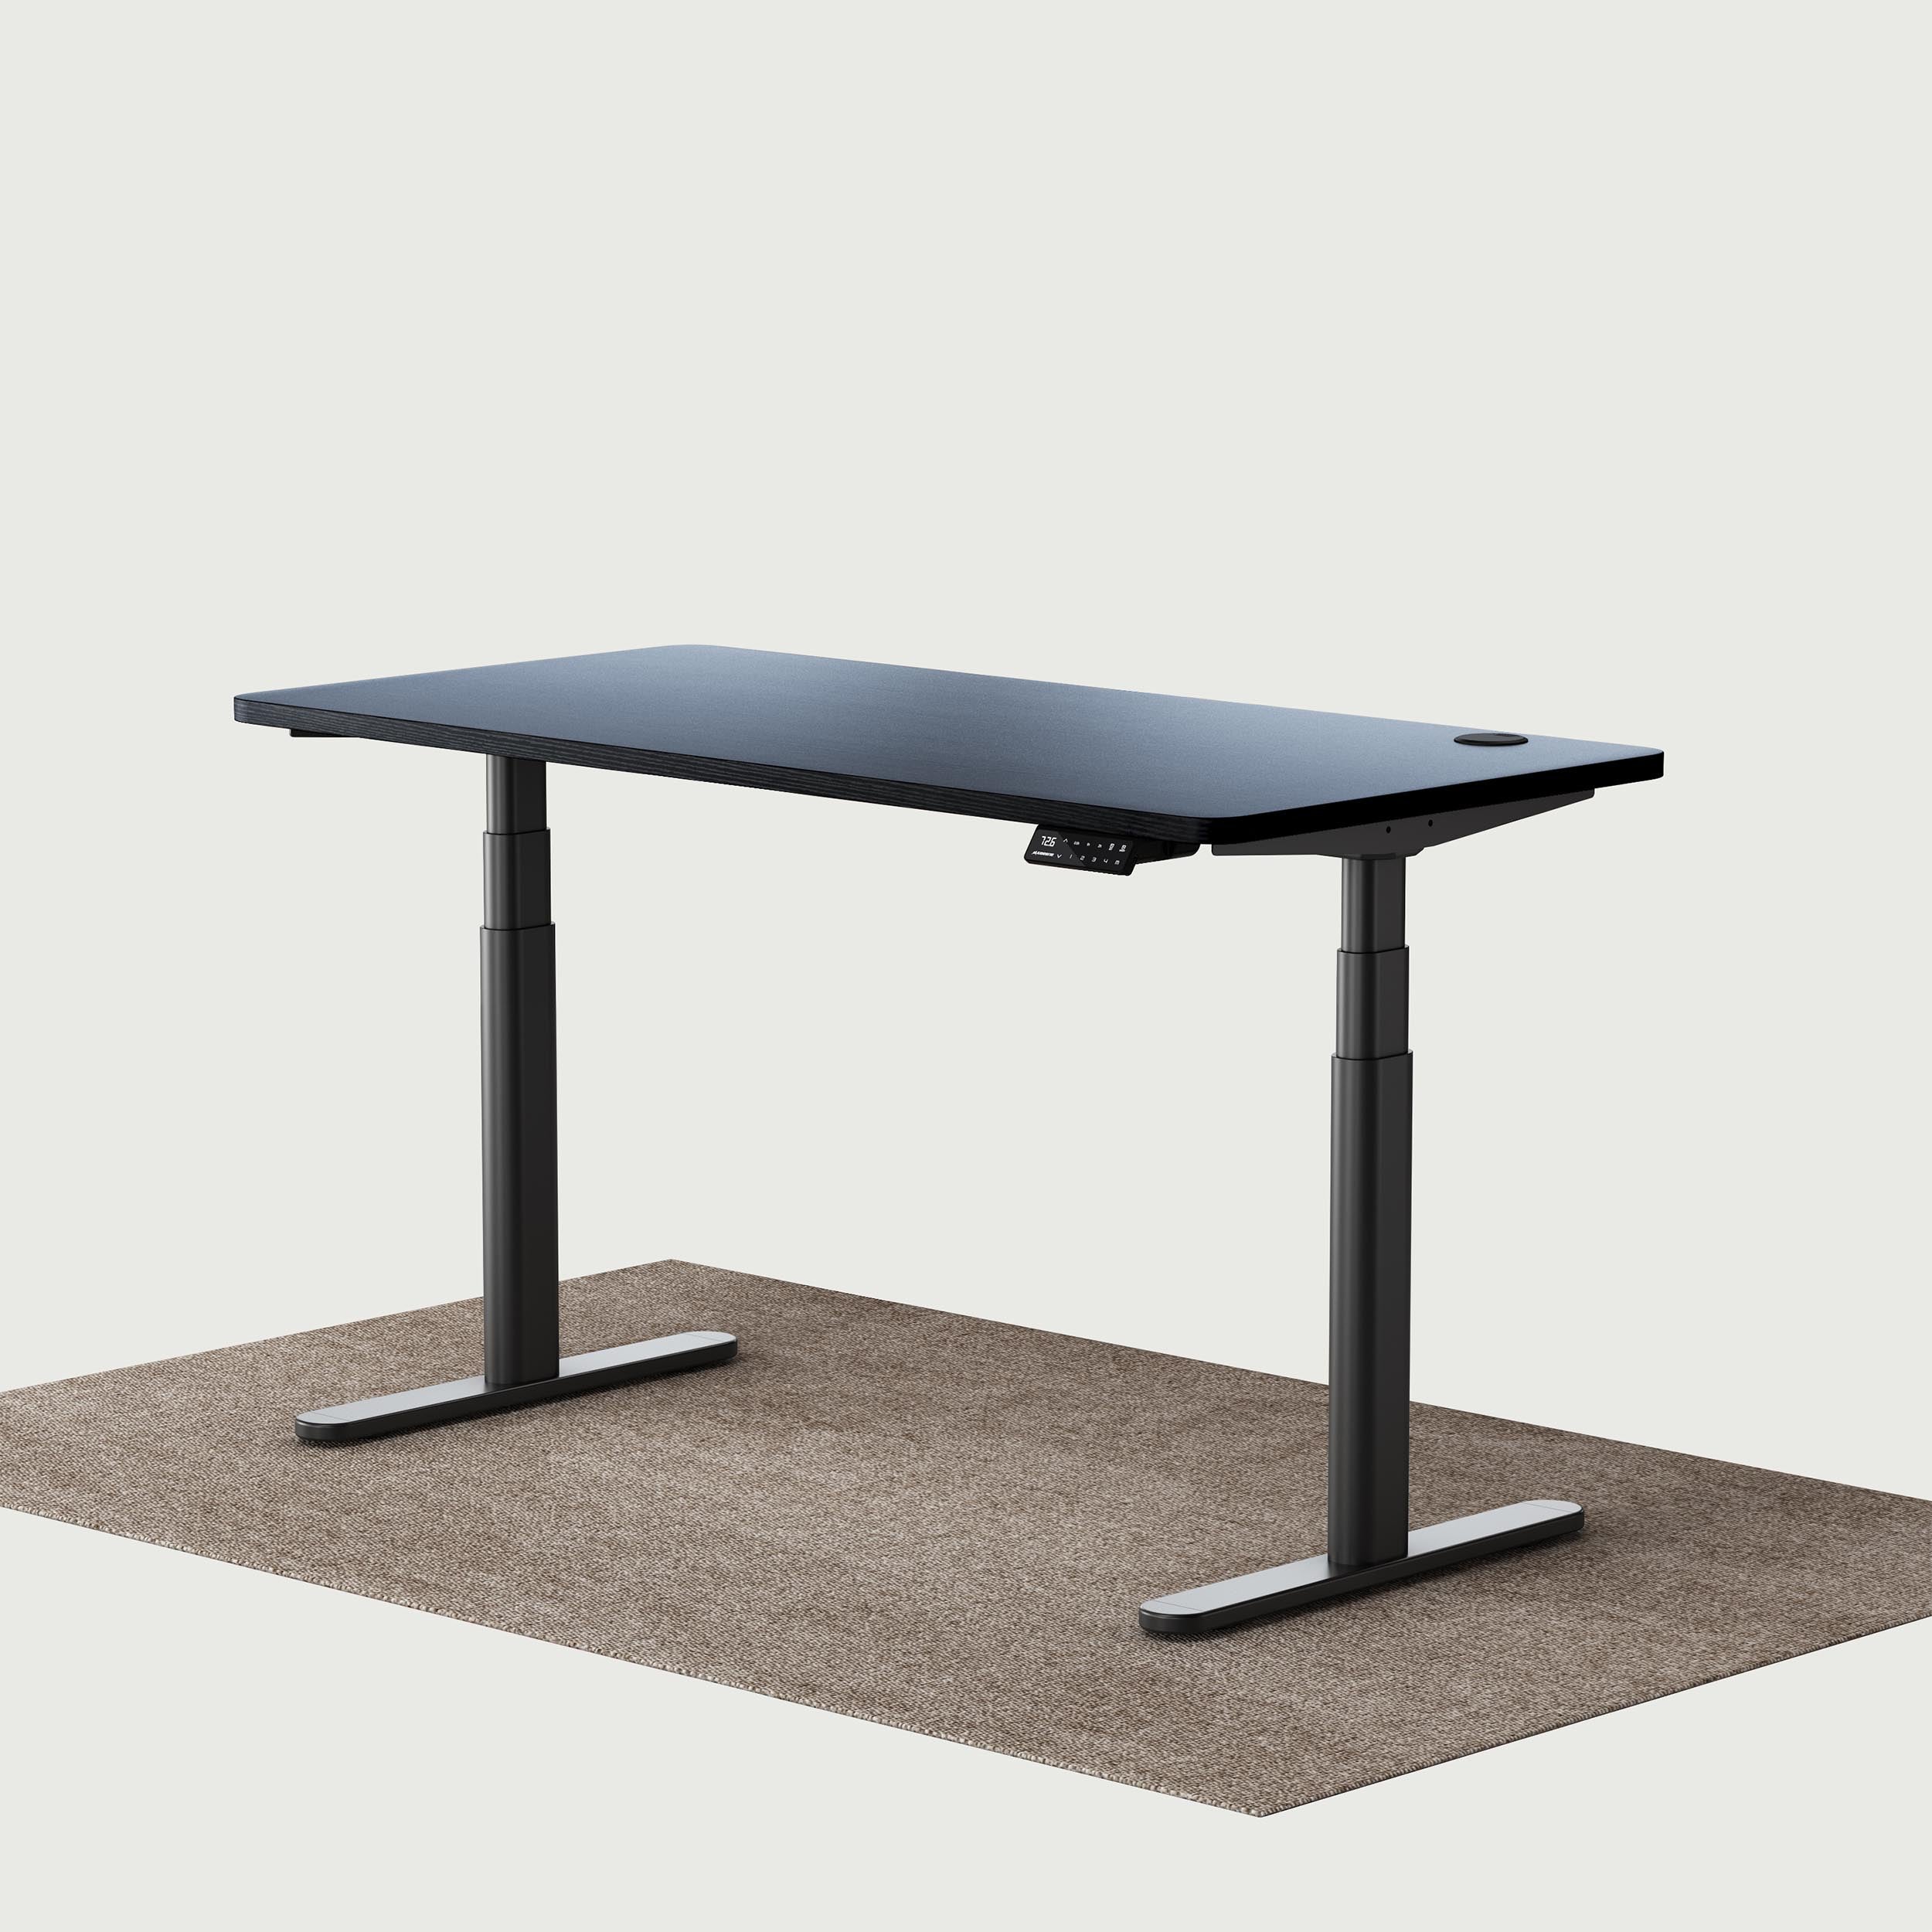 TH2 Pro Plus black oval electric standing desk frame with black 140x70 cm desktop